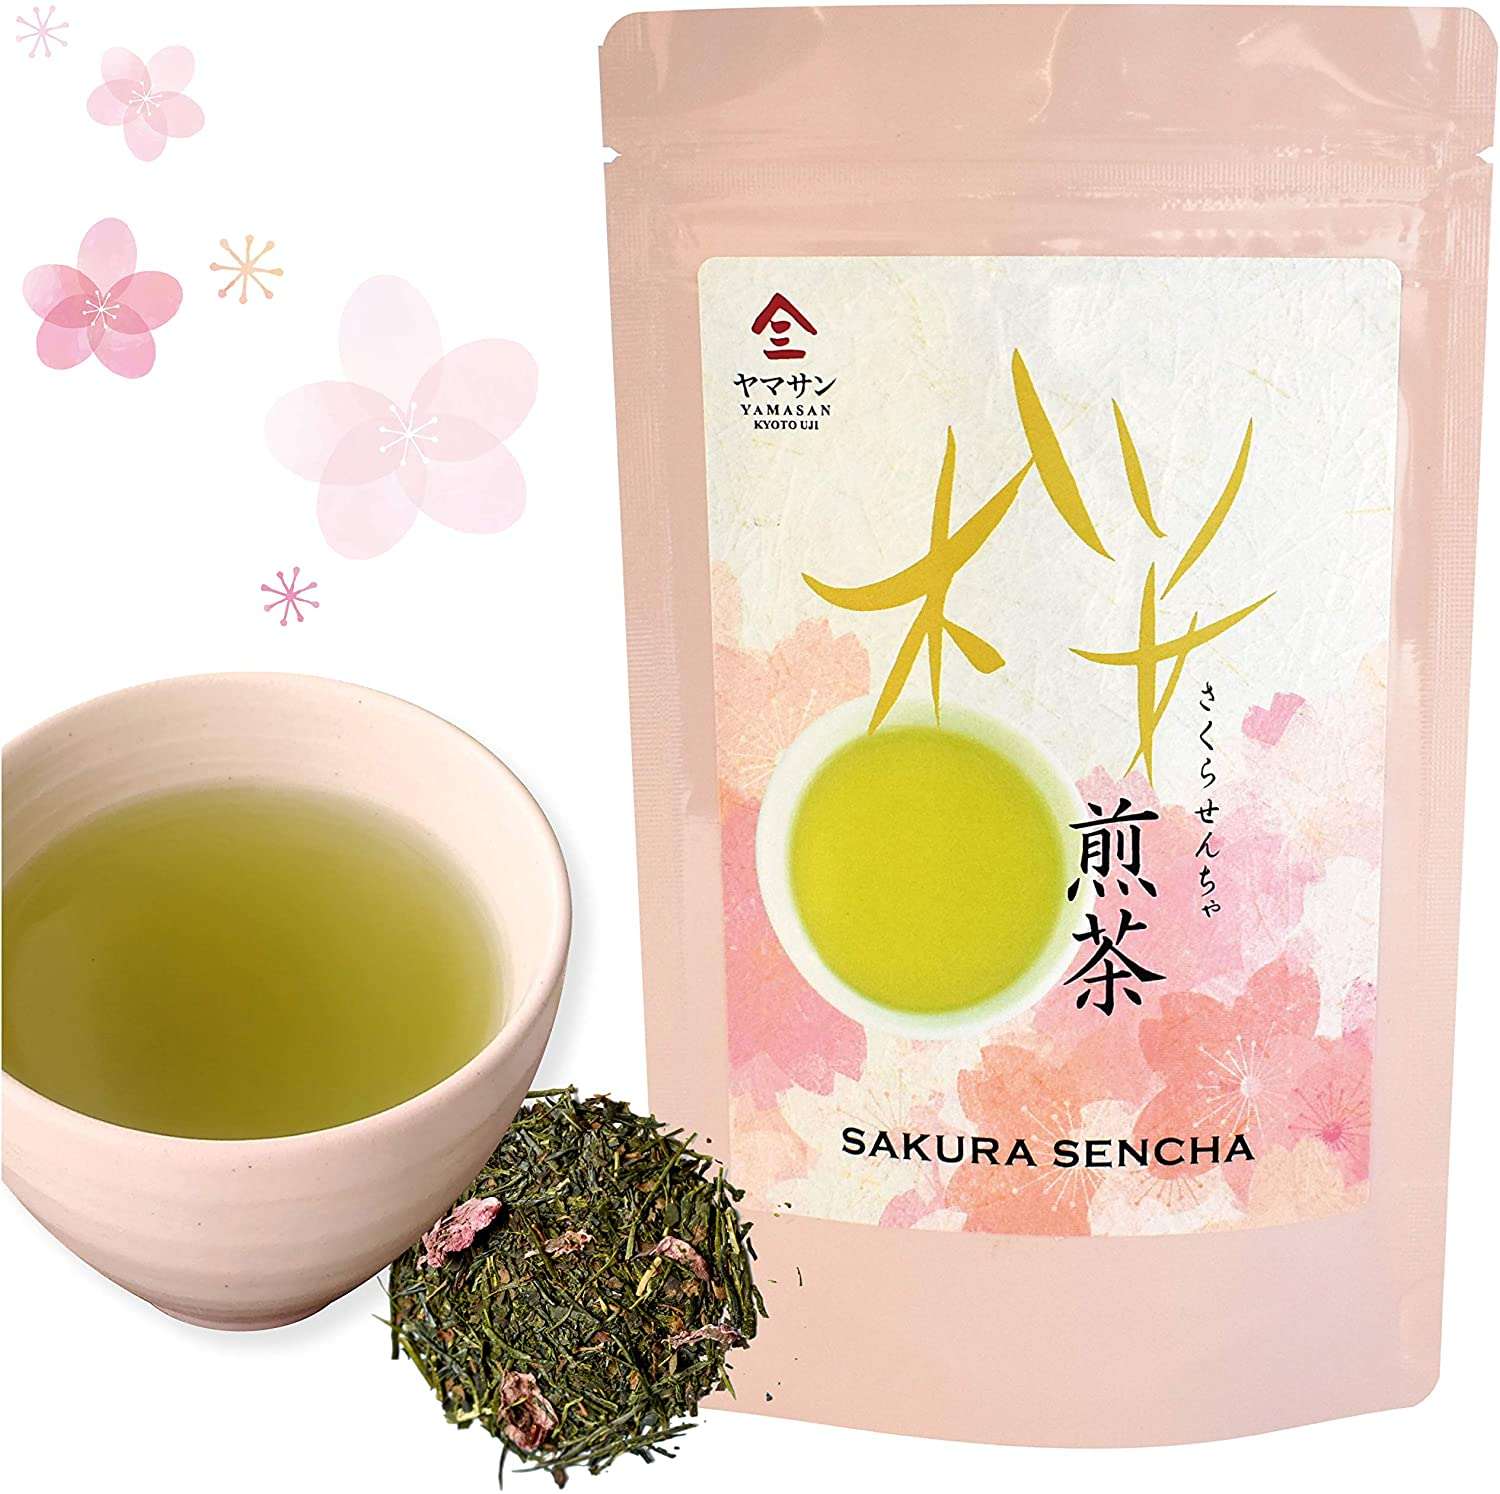 Sakura Sencha Tea